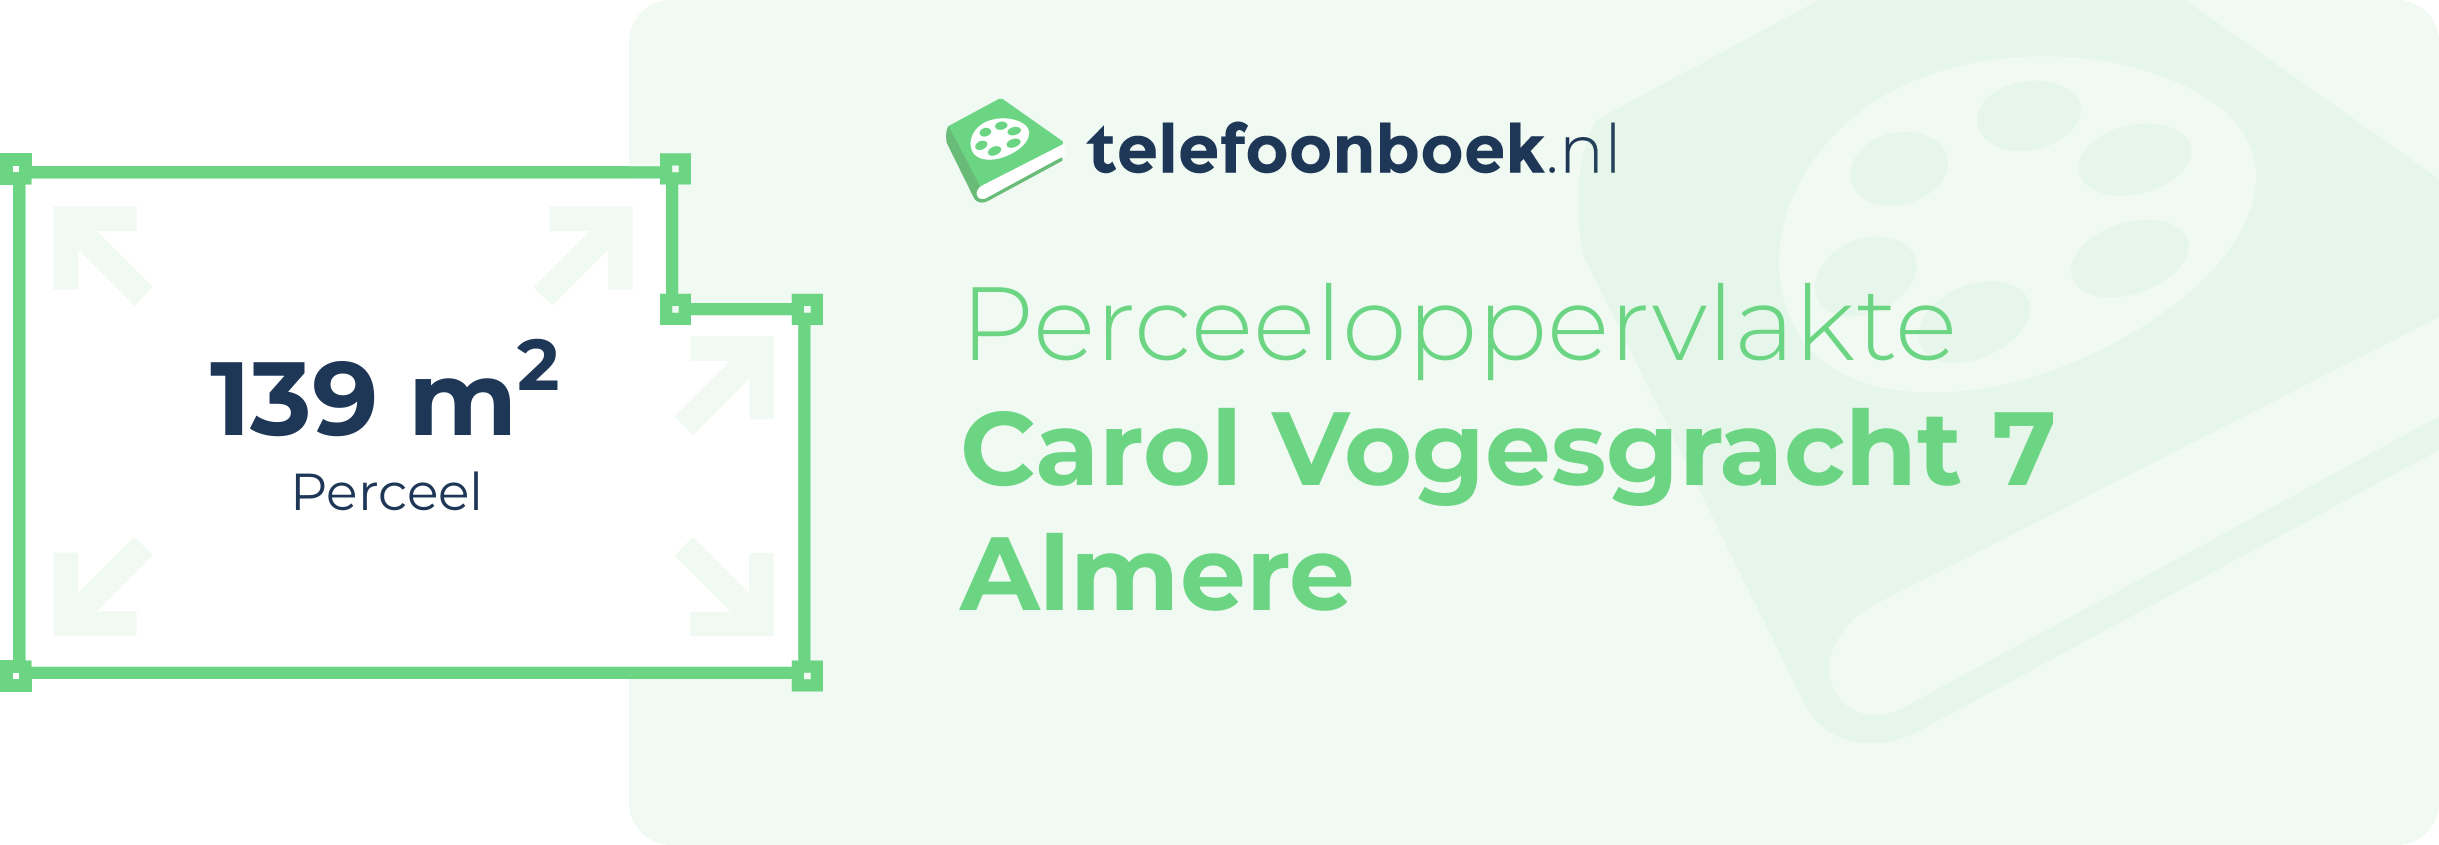 Perceeloppervlakte Carol Vogesgracht 7 Almere